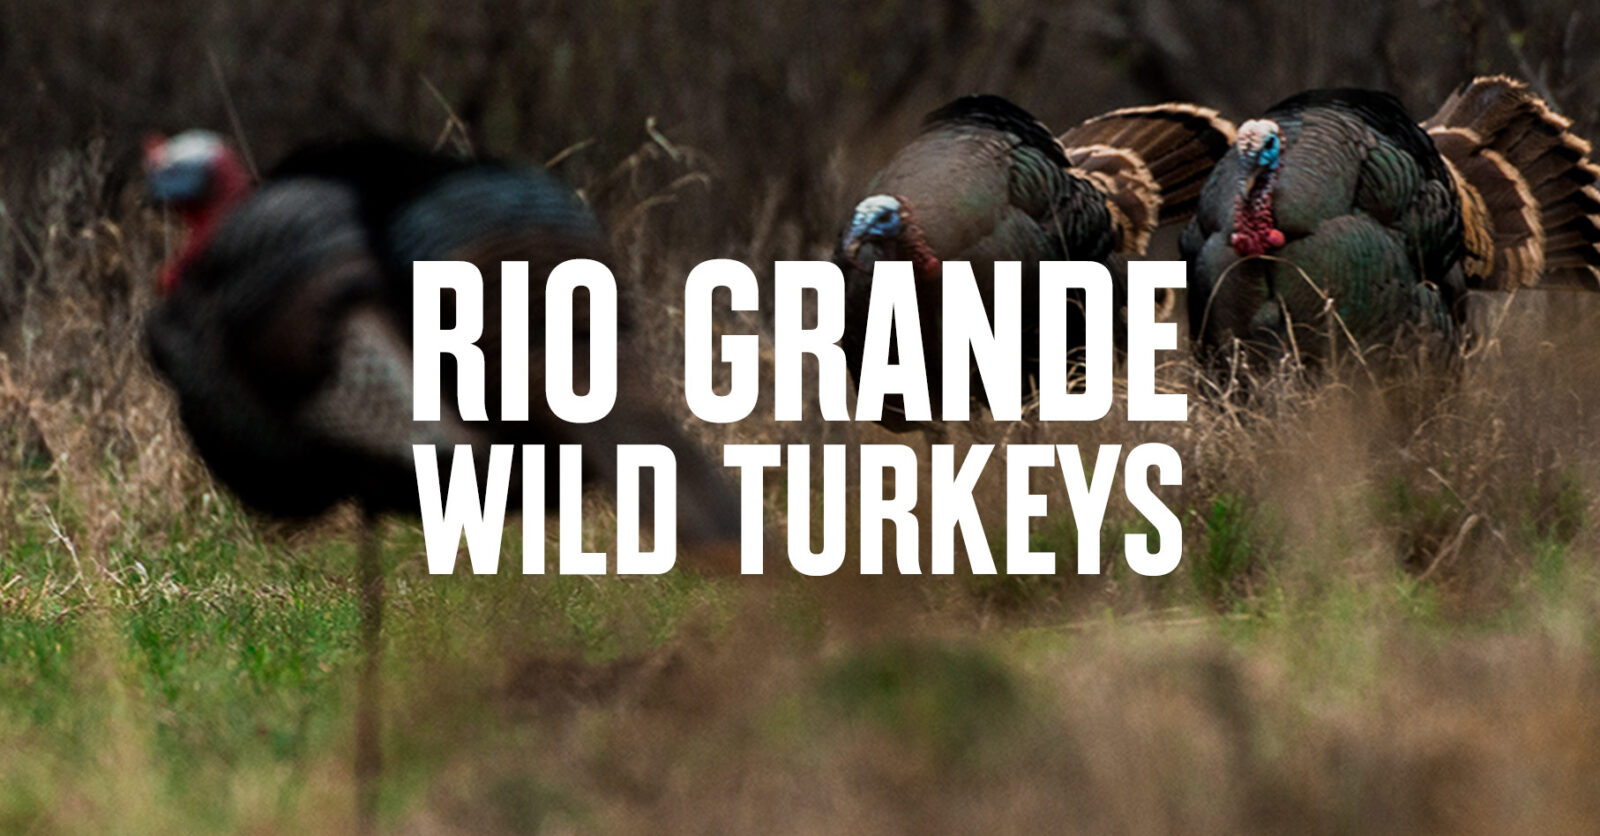 Rio grande wild turkey